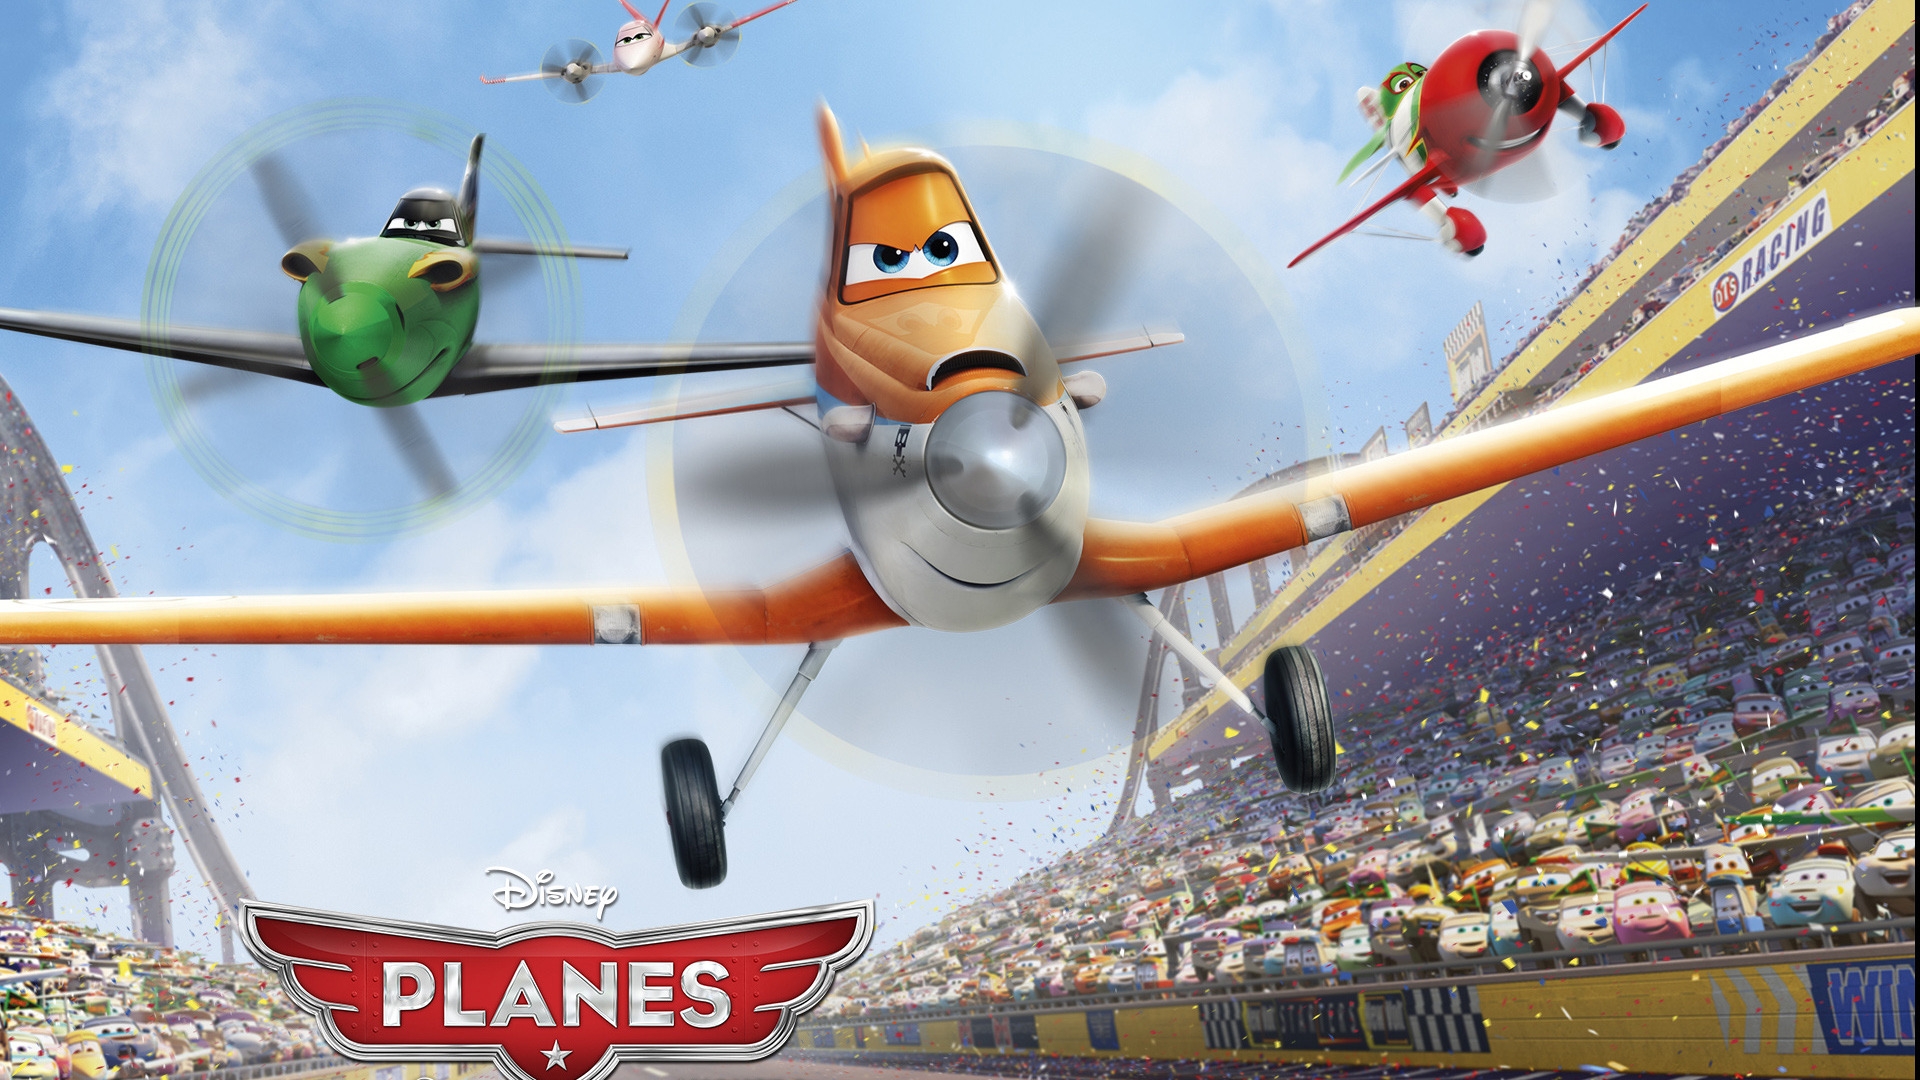 Disney Planes Movie for 1920 x 1080 HDTV 1080p resolution